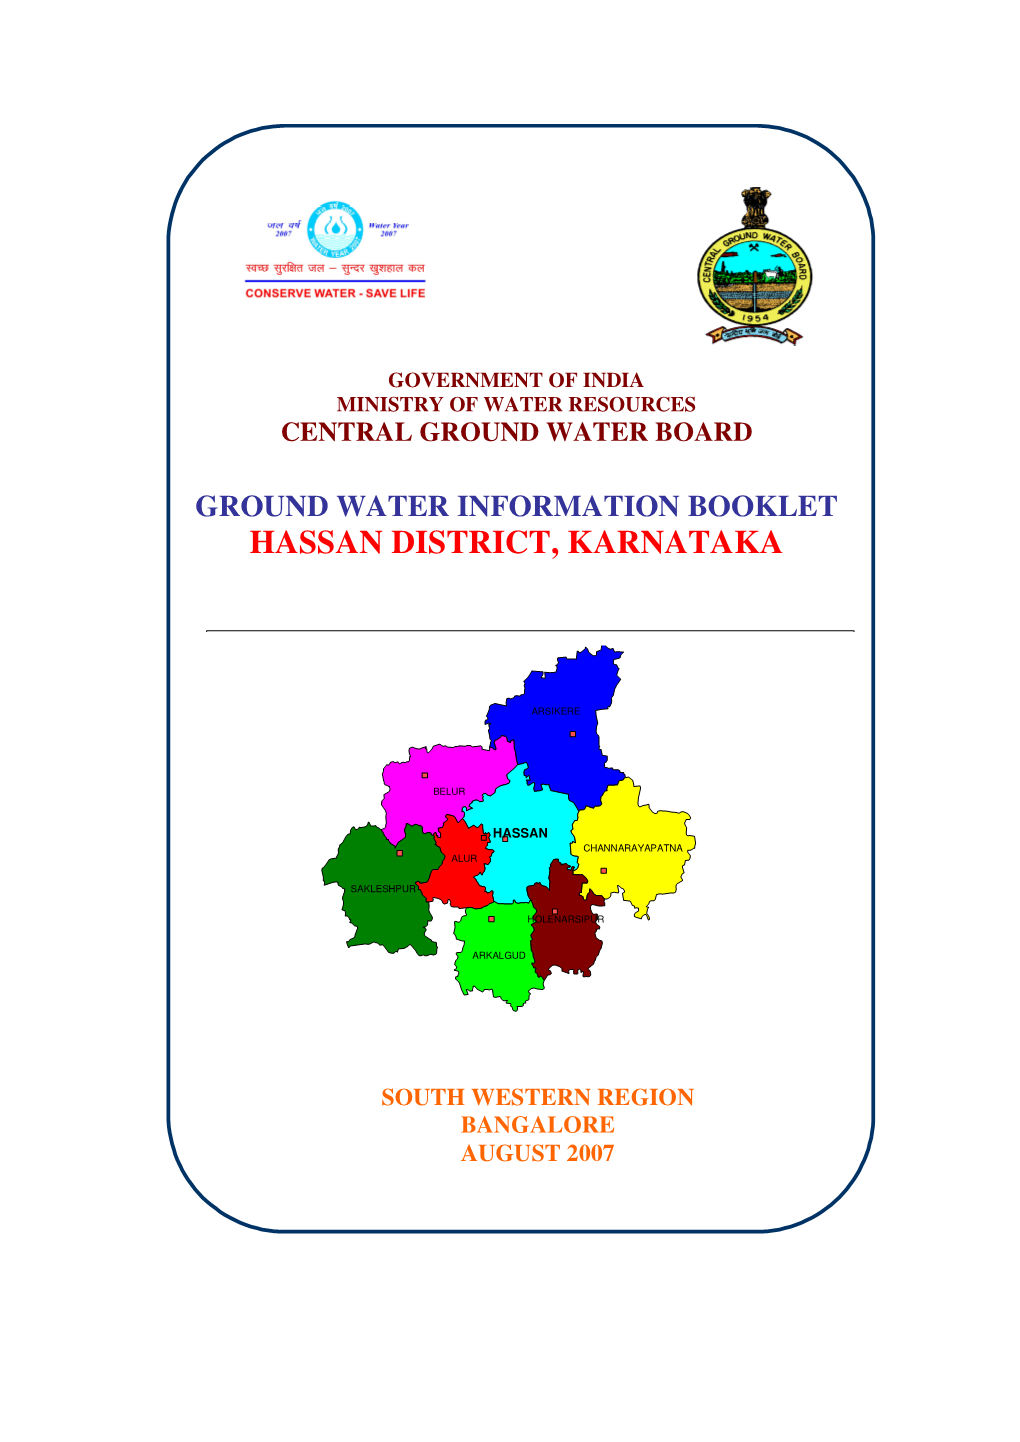 Hassan District, Karnataka